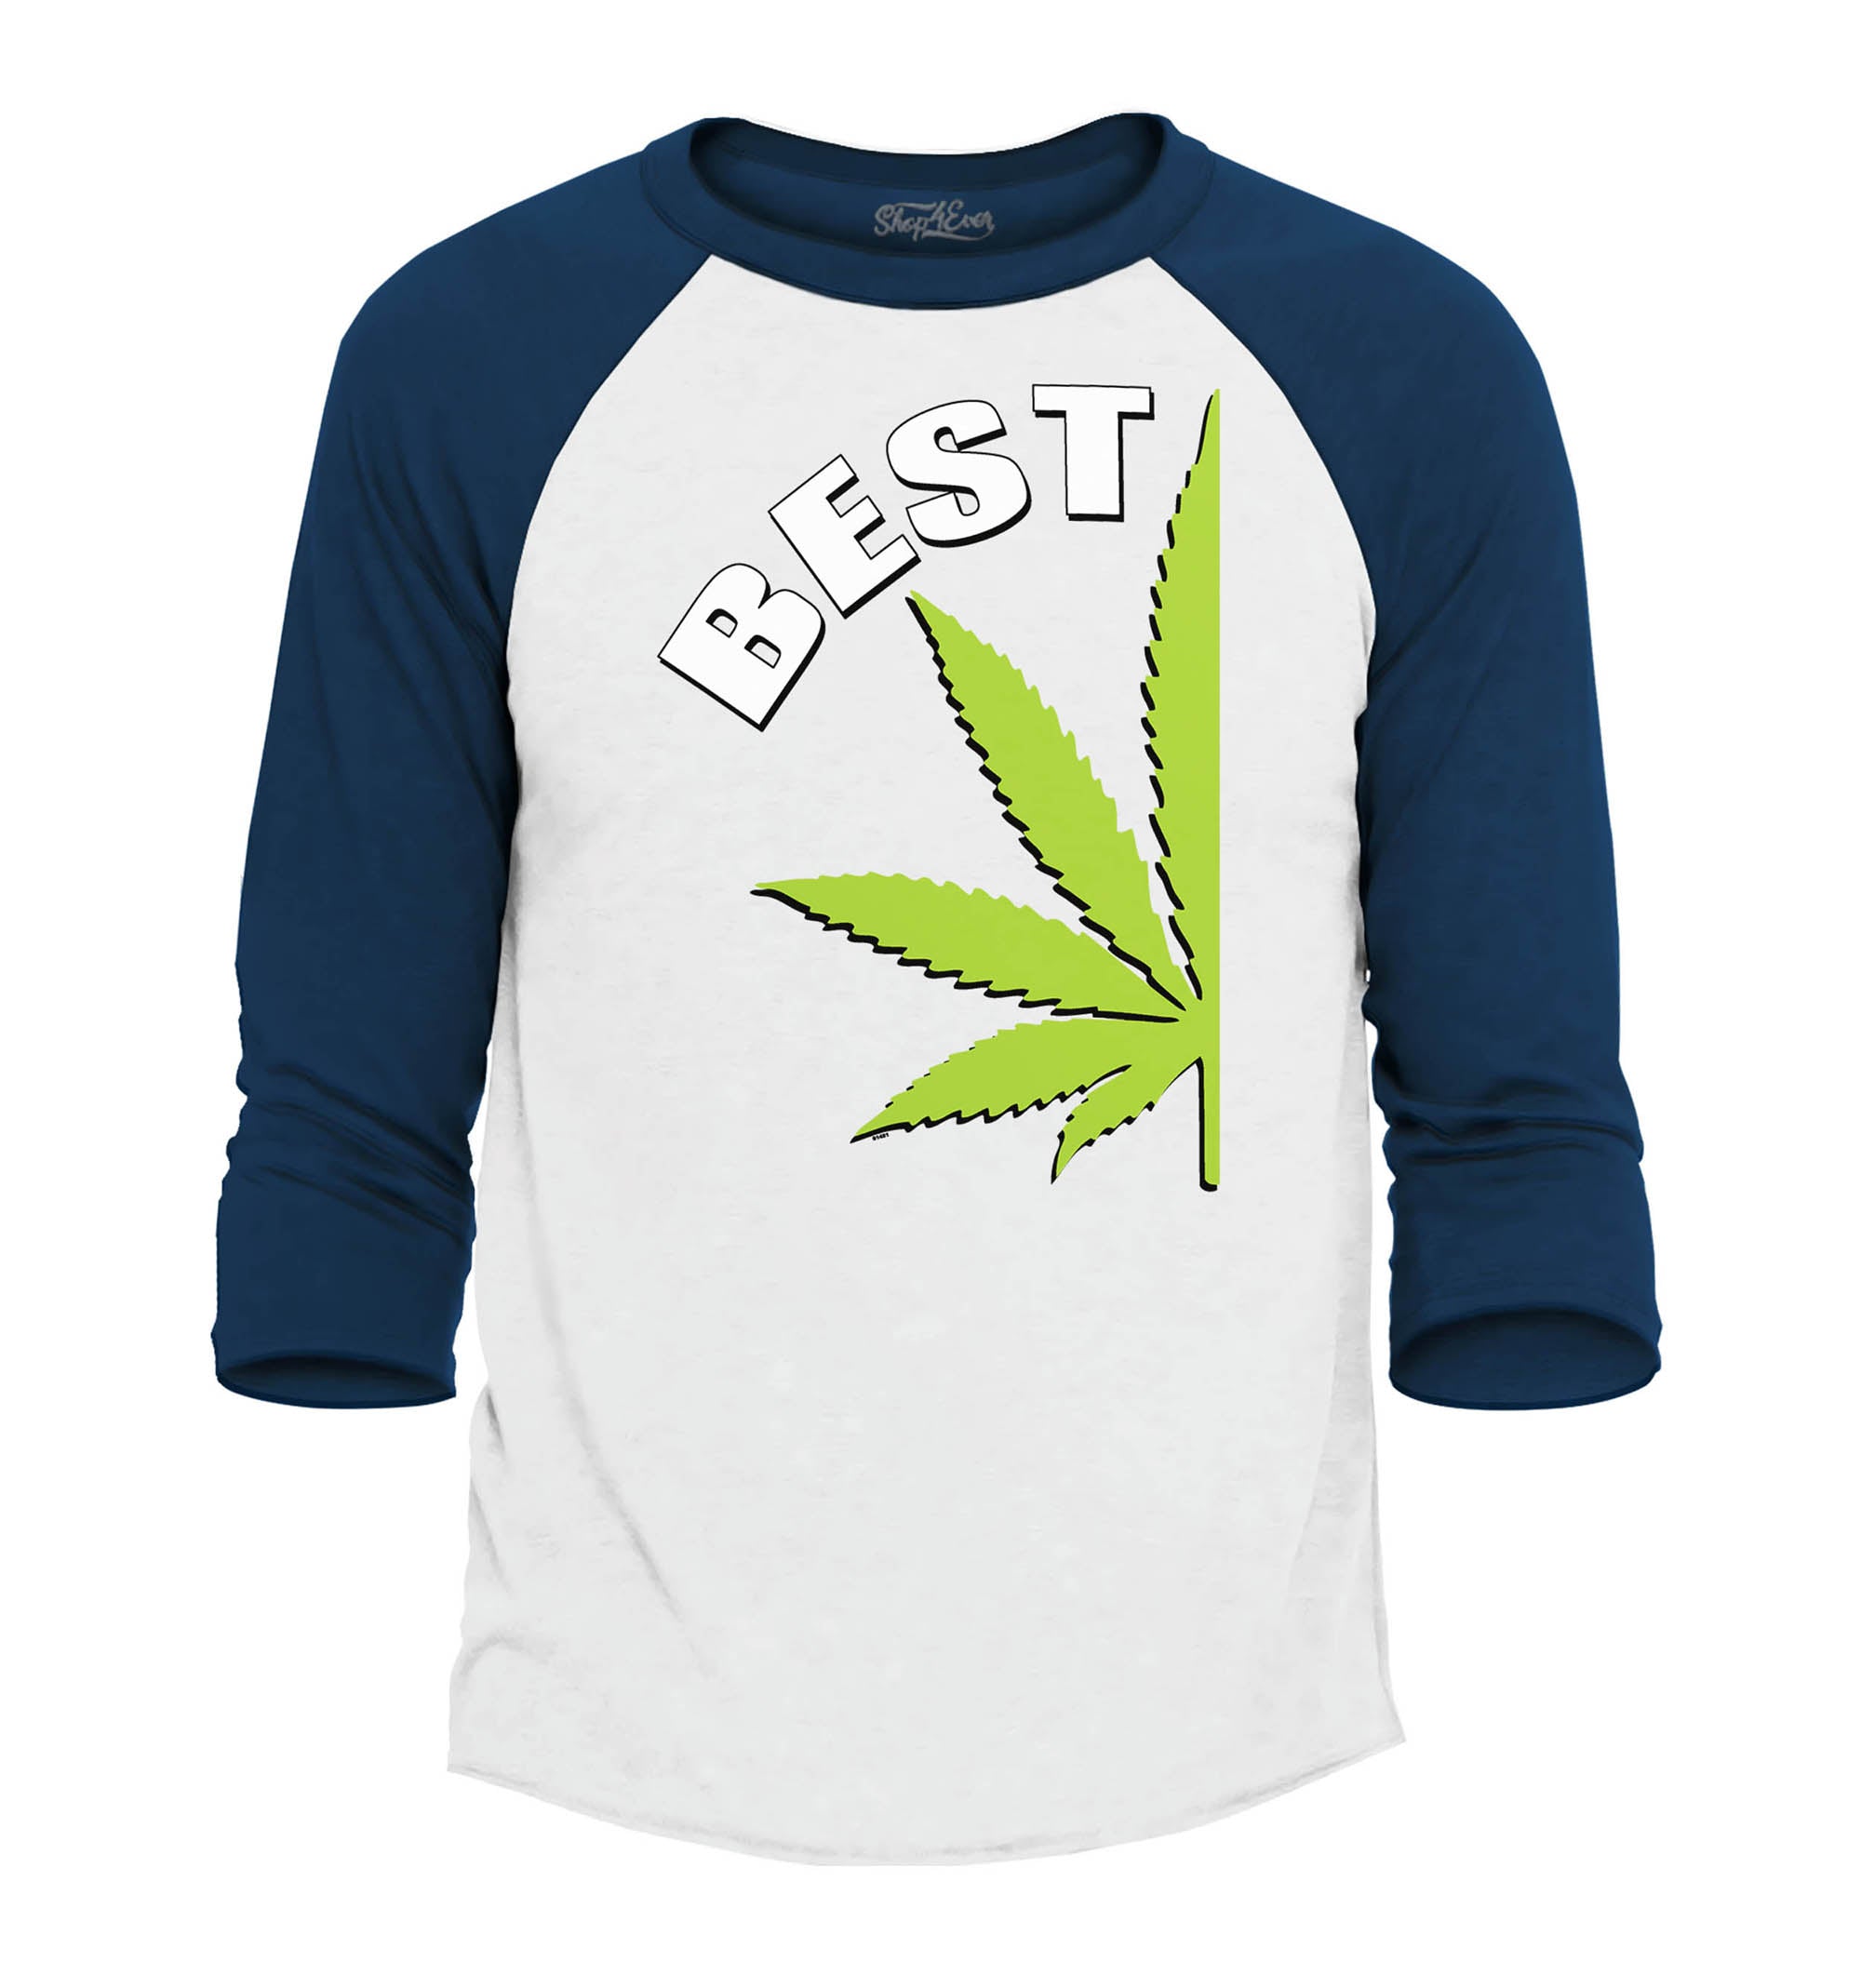 Best Buds Weed Leaf Baseball Shirt Weed Smokers Raglan Shirt